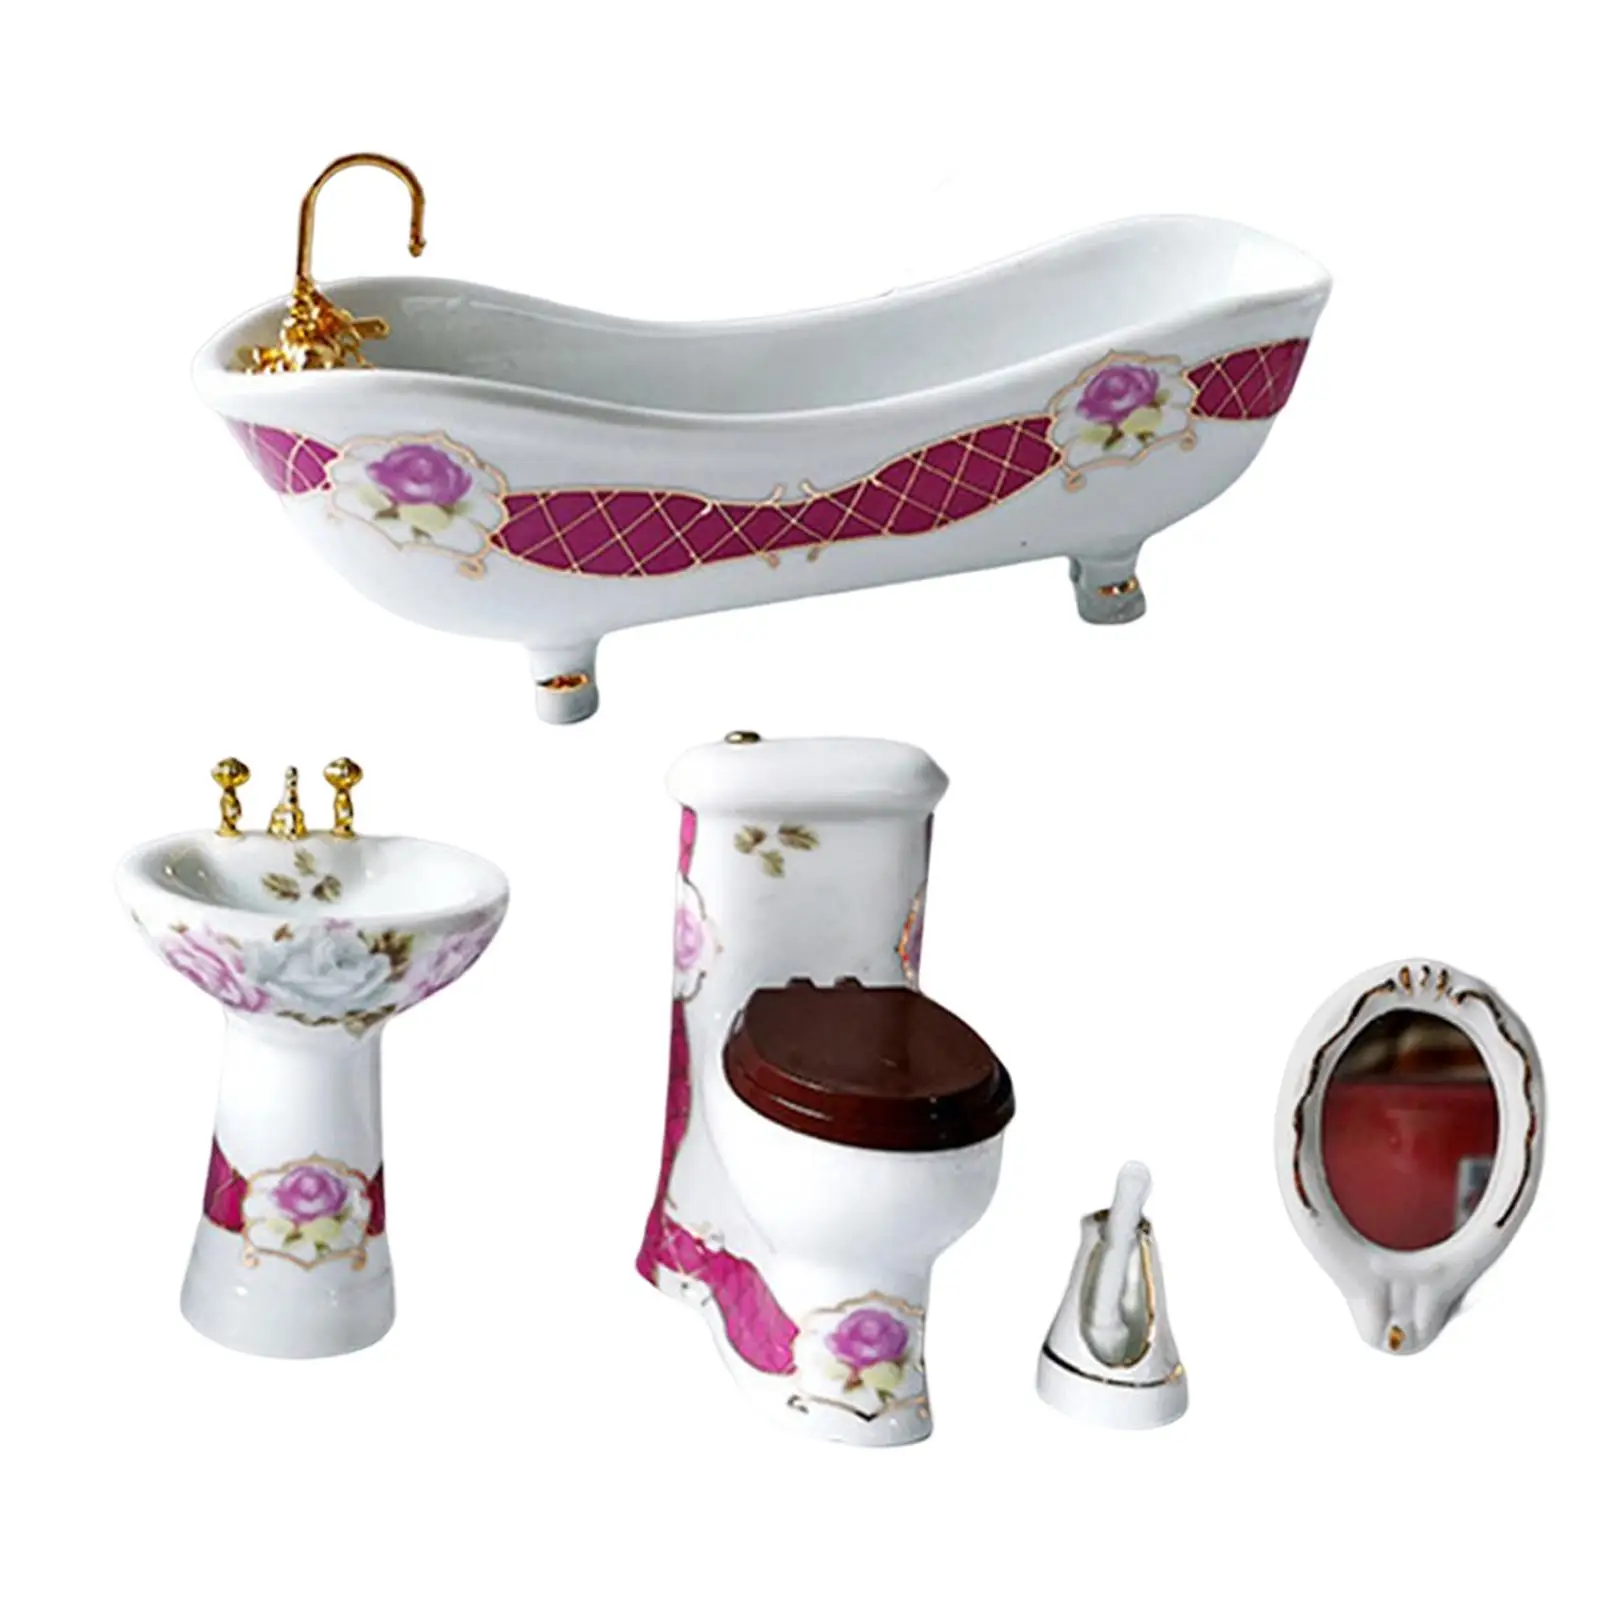 5Pcs Miniature Bathroom Set Dollhouse Furniture Miniature Toy Mini Ceramic Toilet Miniature Washbasin for Restroom Decoration